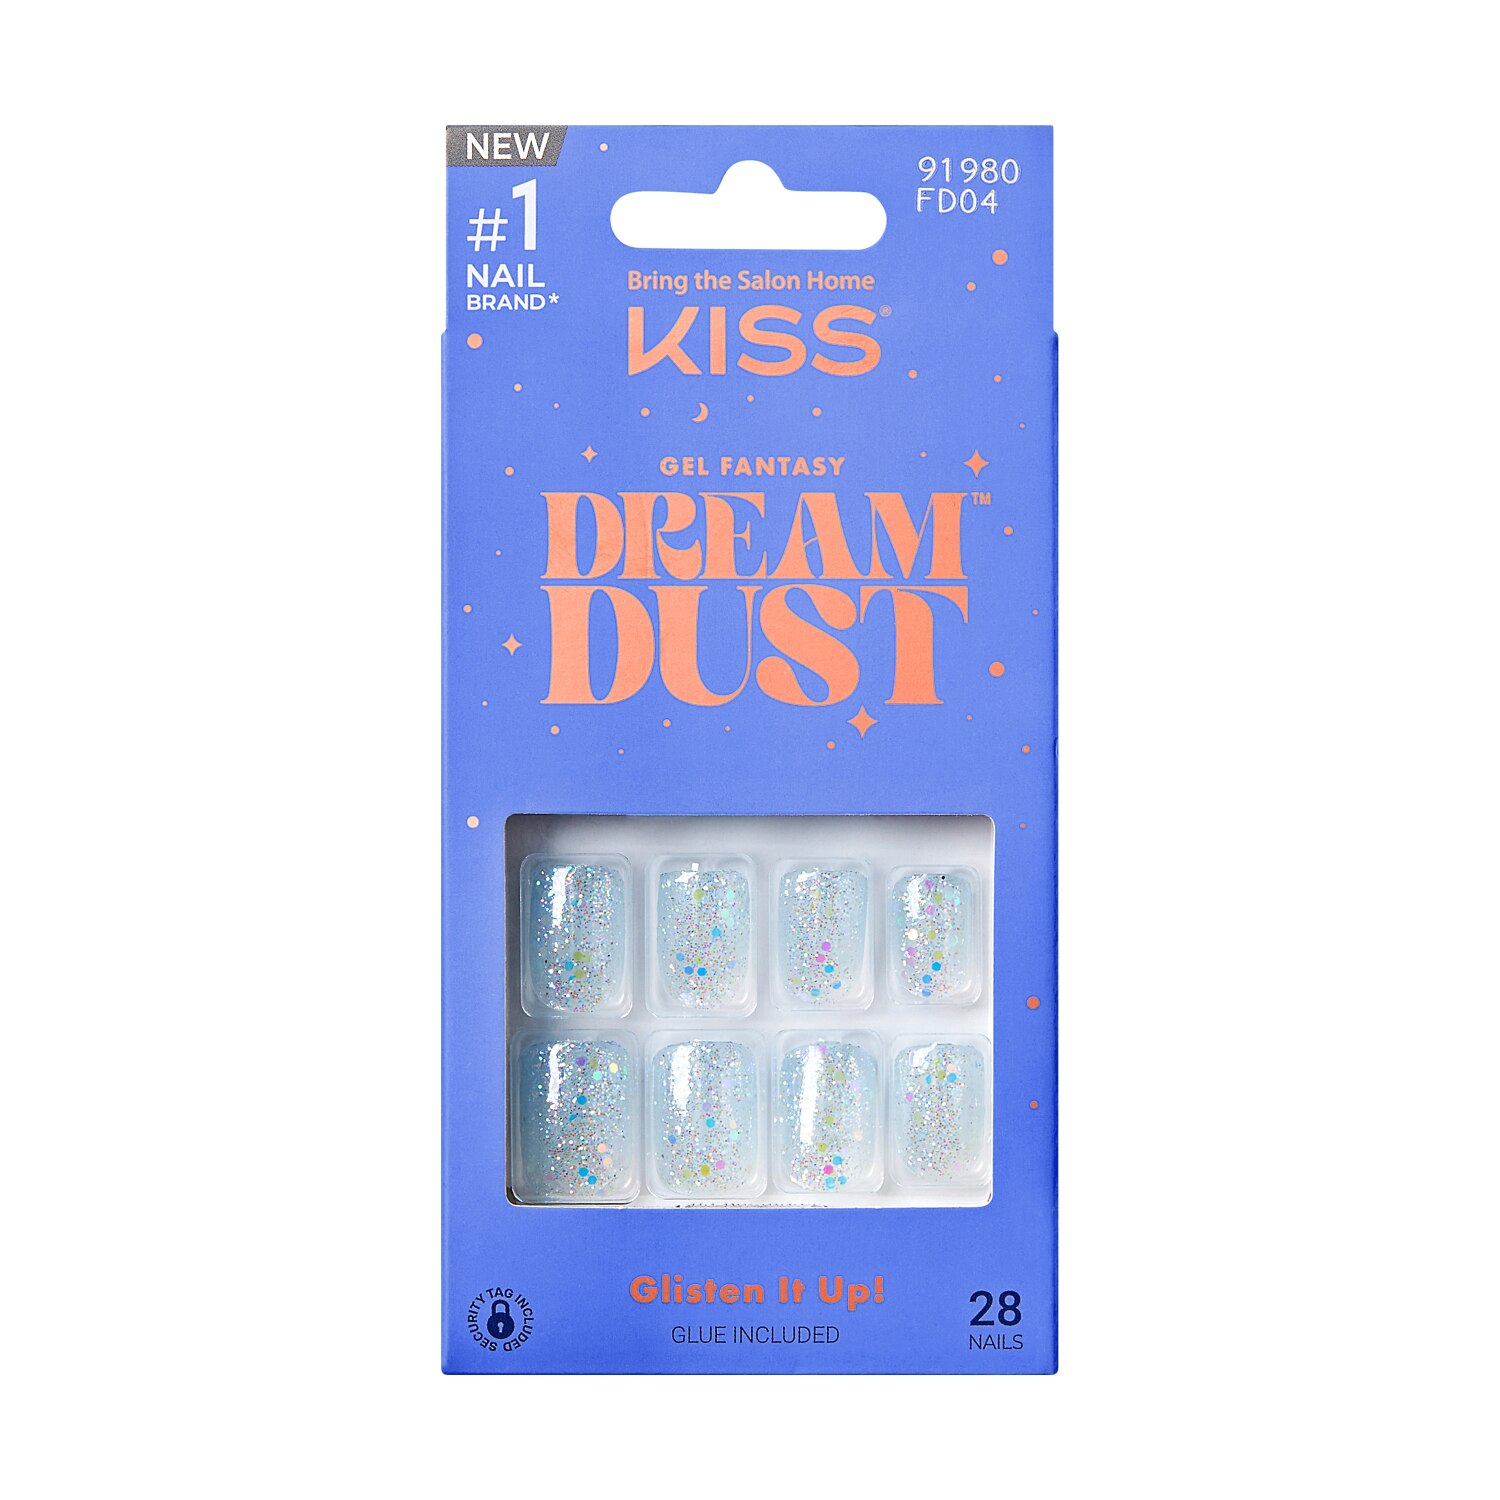 KISS Gel Fantasy Dreamdust Nails, Champagnes , CVS